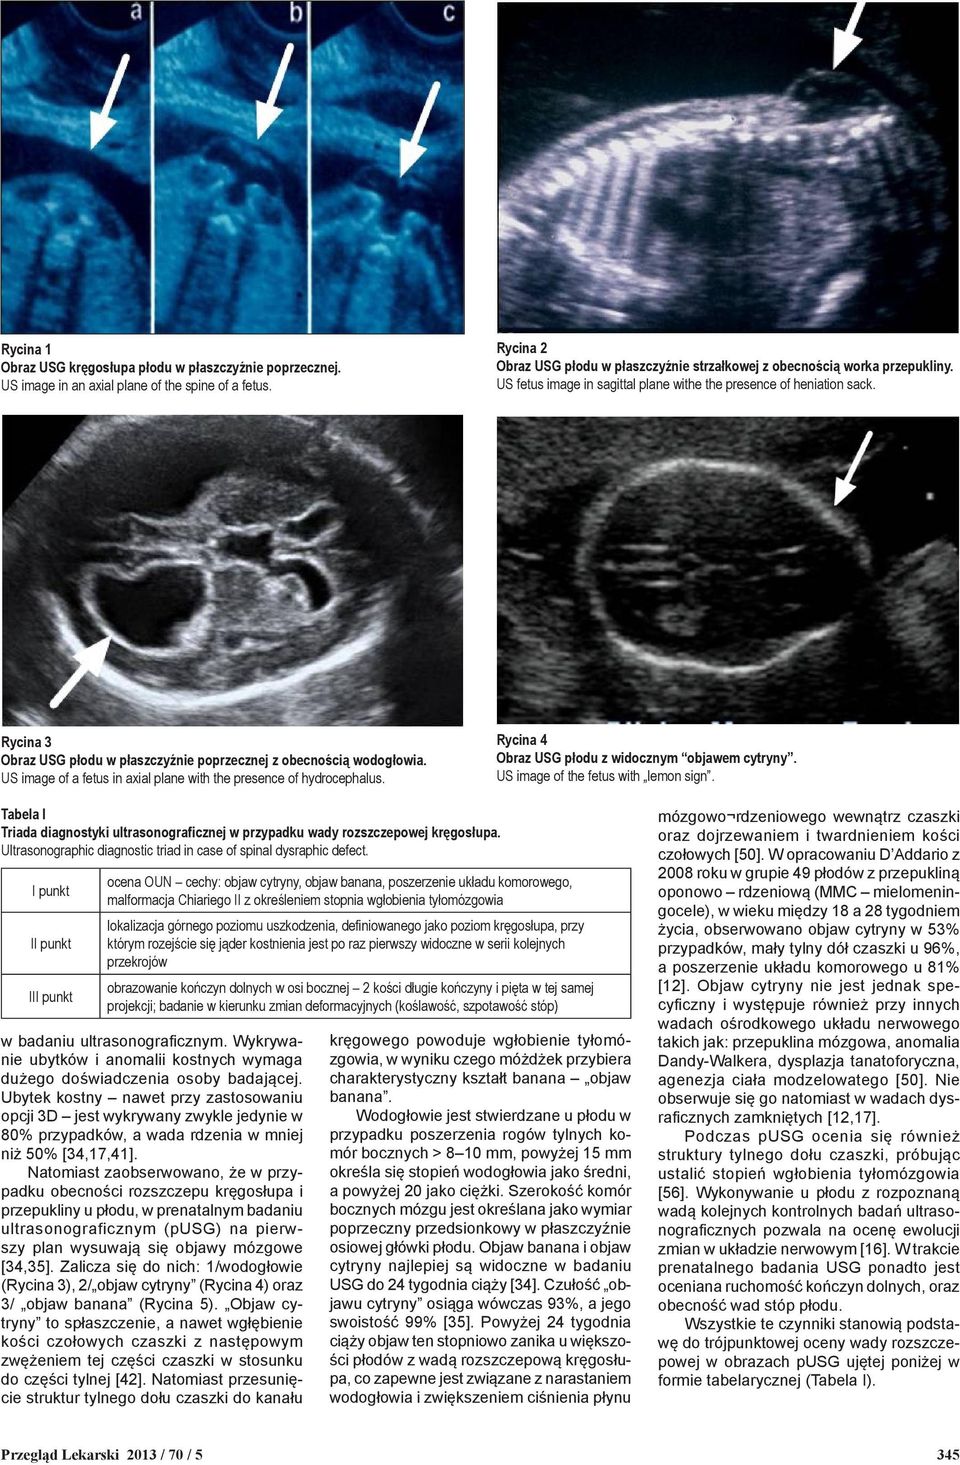 US image of a fetus in axial plane with the presence of hydrocephalus. Rycina 4 Obraz USG płodu z widocznym objawem cytryny. US image of the fetus with lemon sign.